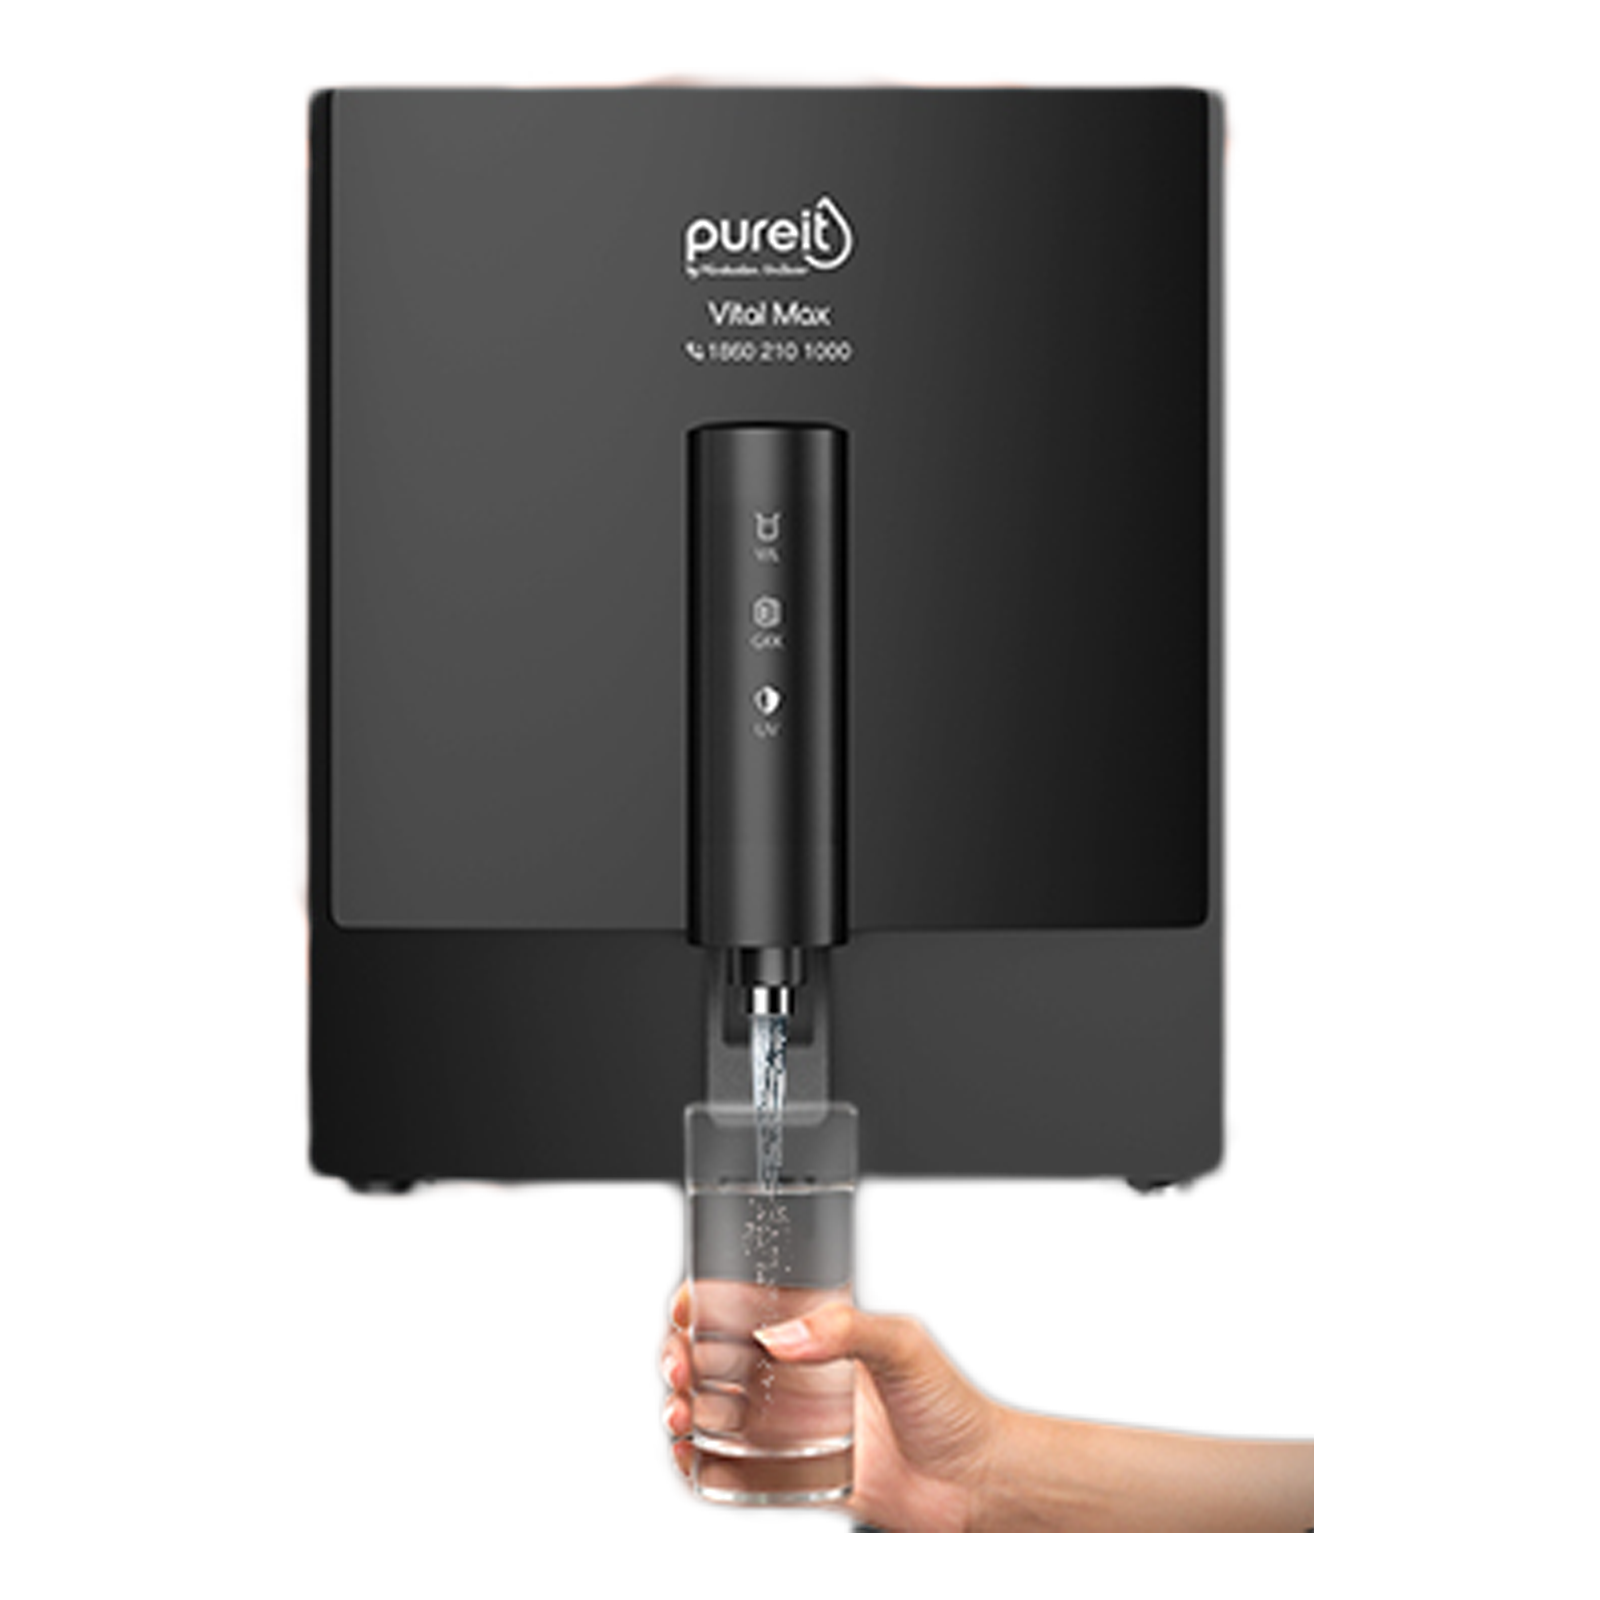 Pureit Vital Max RO Electrical Water Purifier (Smartsense Indicators, UPVA100, Black)